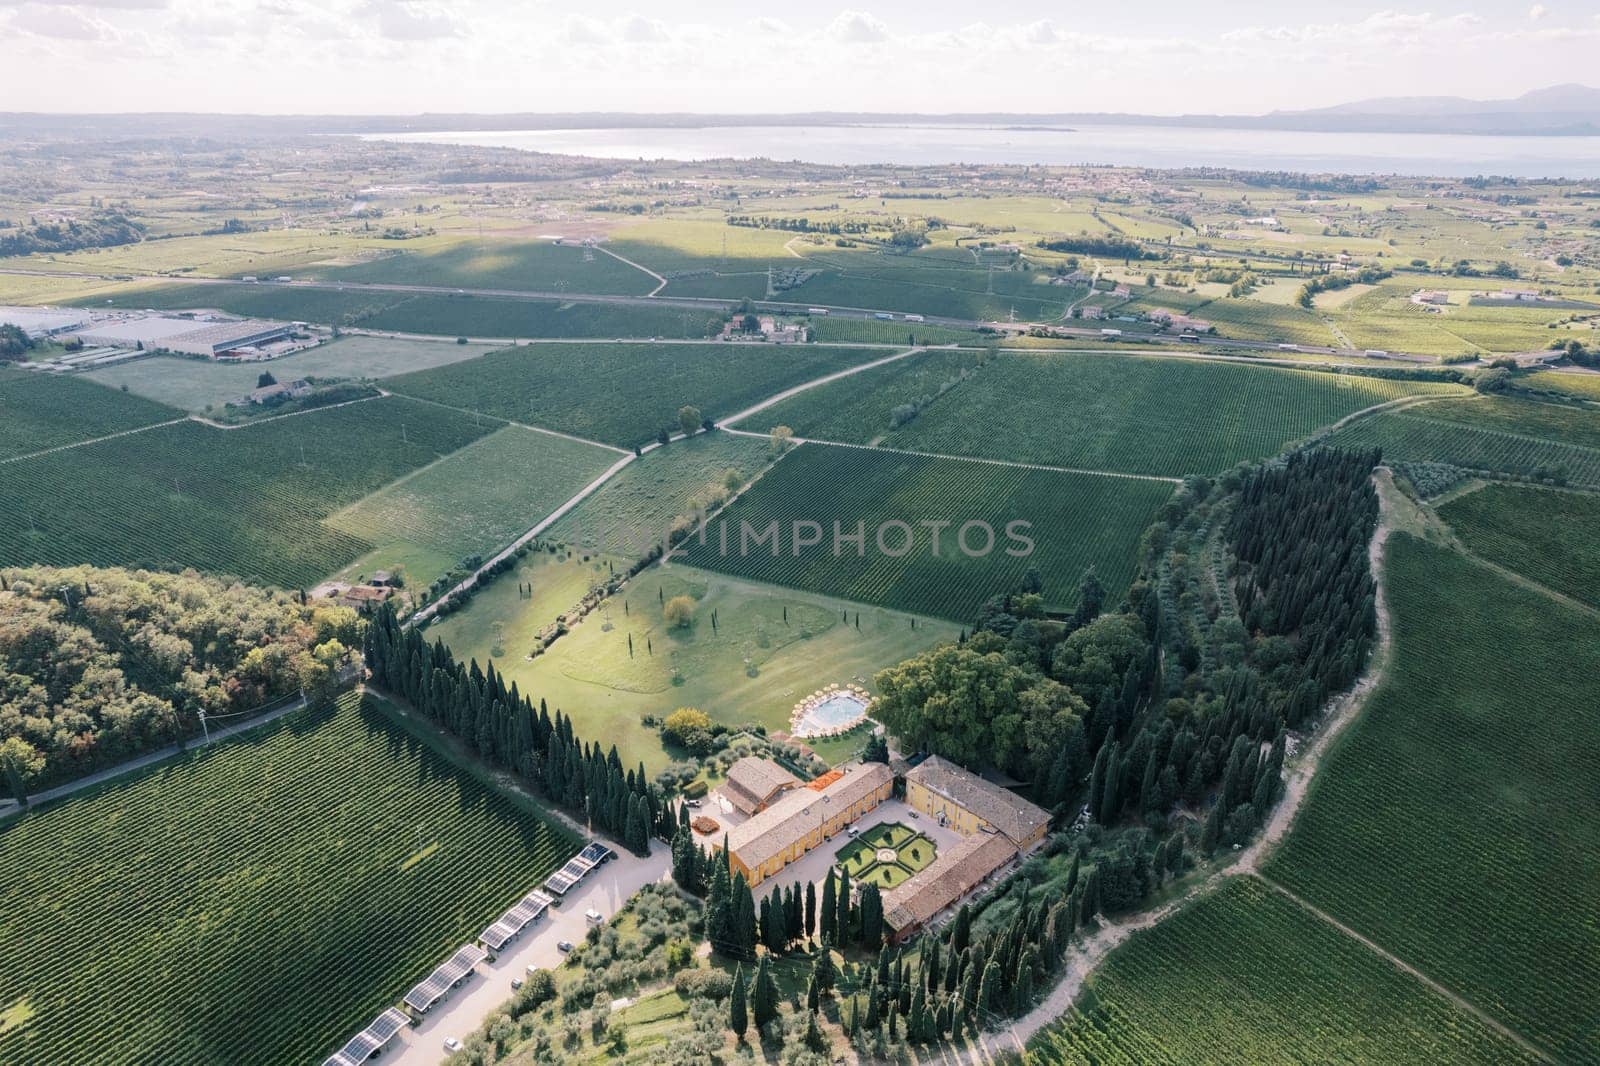 Drone view of Villa Cordevigo in a green garden surrounded by fields. Verona, Italy. High quality photo